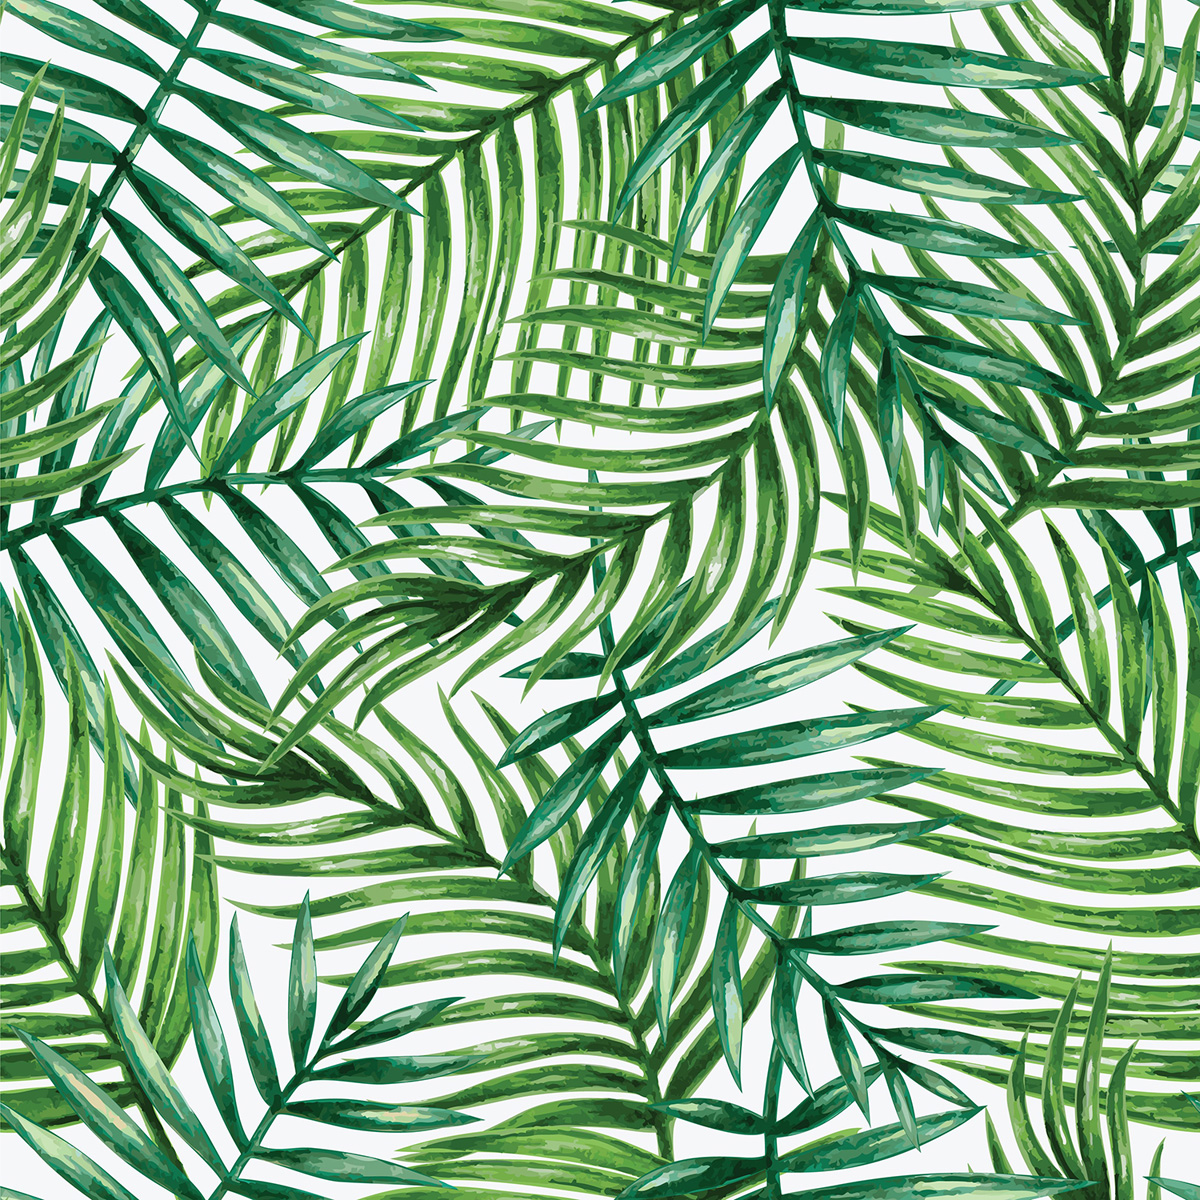 Water Repellent, UV Resistant, PU Coated Fabric Digital Leaf Print On Natural